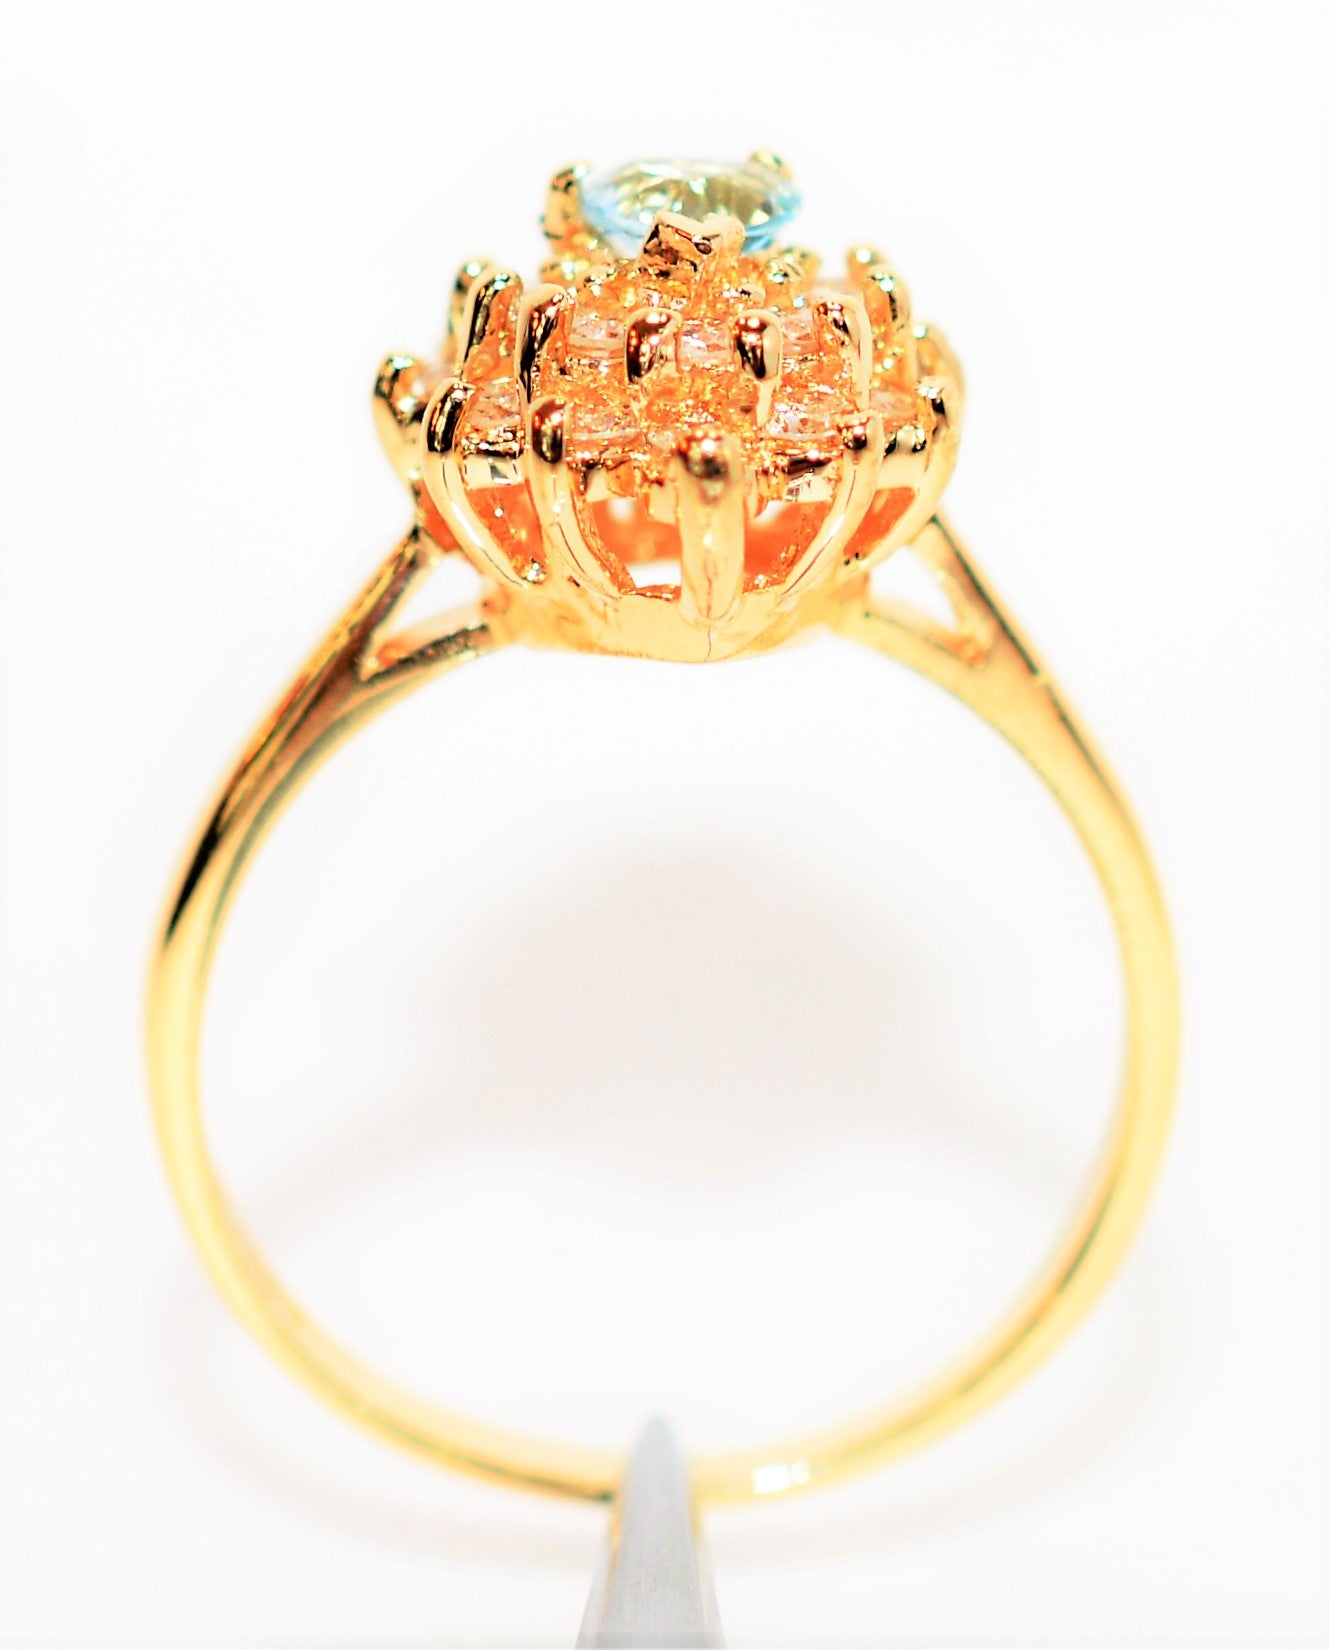 Natural Paraiba Tourmaline & Diamond Ring 14K Solid Gold .65tcw Fine Gemstone Trillion Cut Fine Ladies Jewelry Women's Ring Estate Jewellery